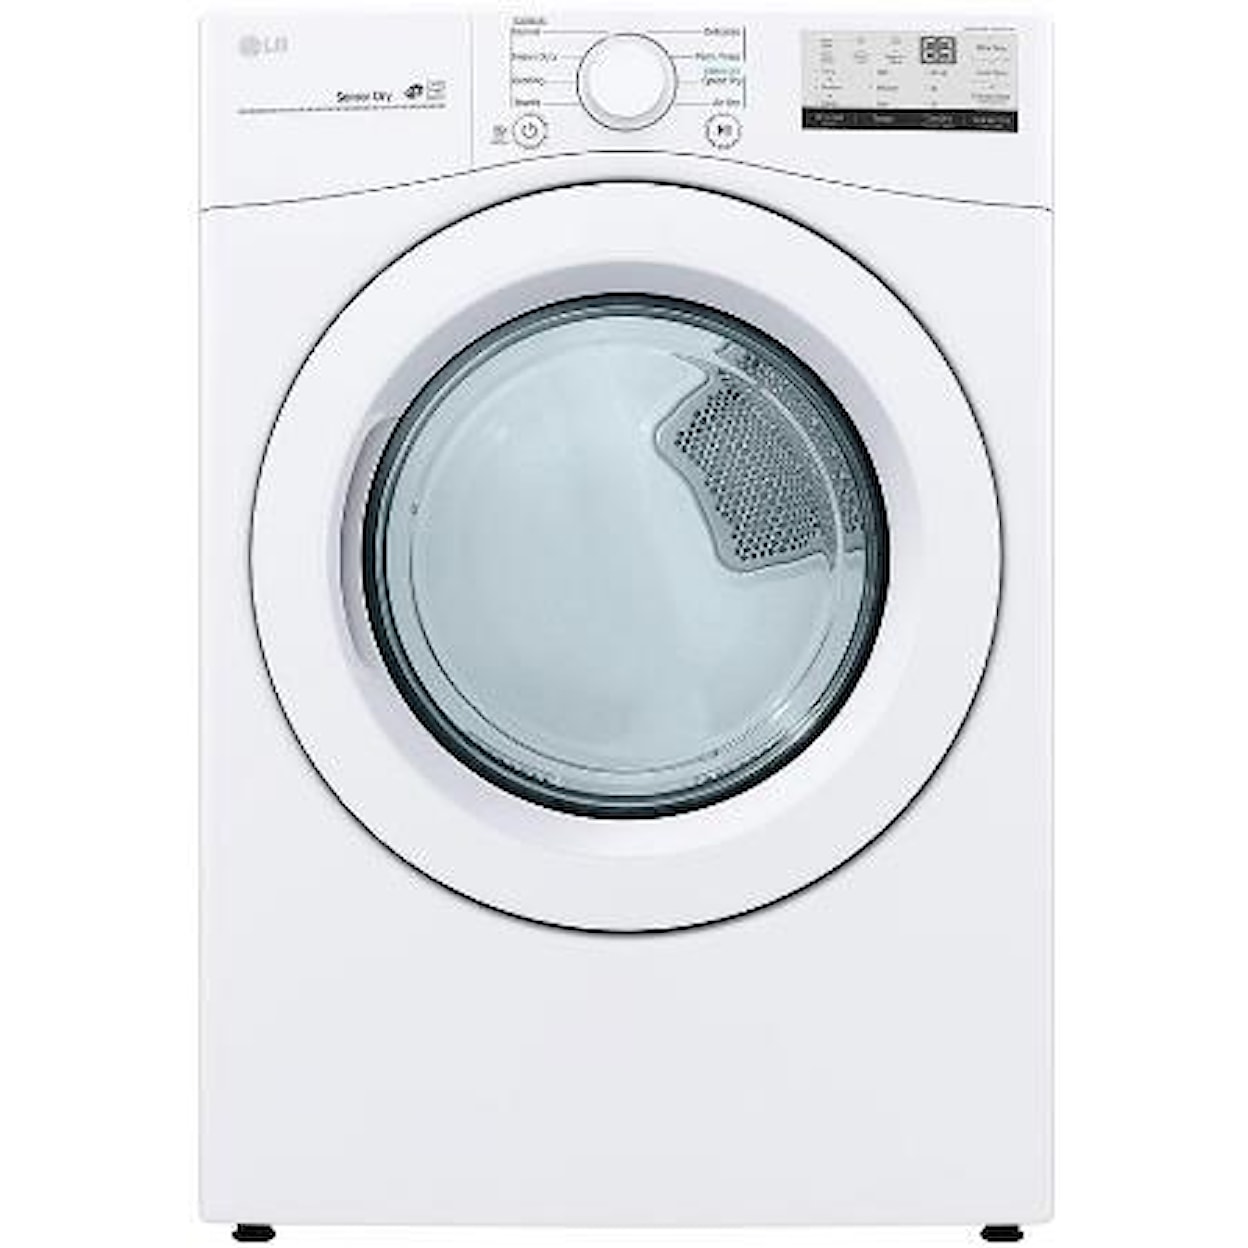 LG Appliances Dryers 7.4 cu. ft. Ultra Large Capacity Dryer